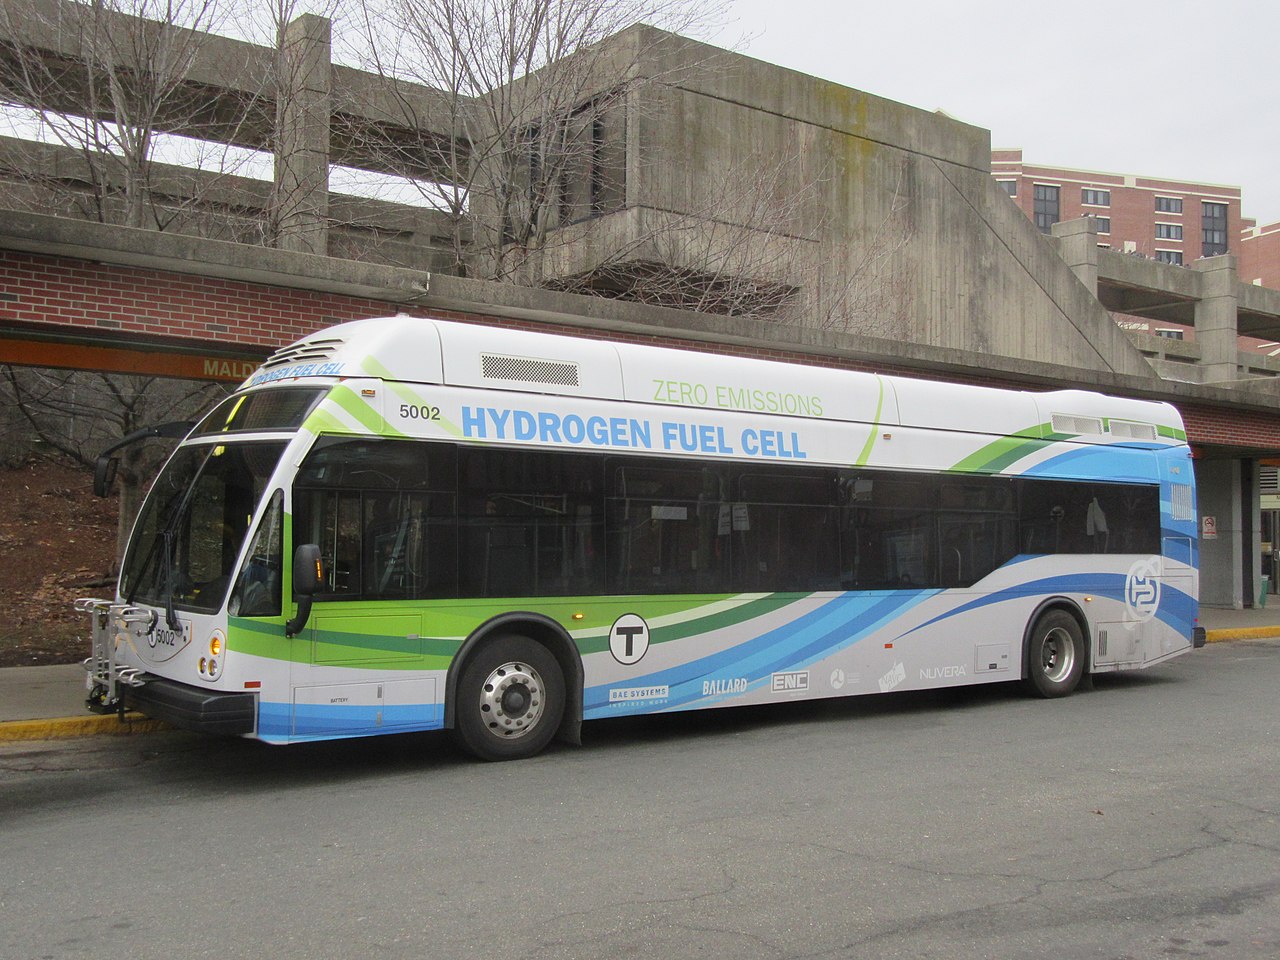 Hydrogen fuel cells vehicles